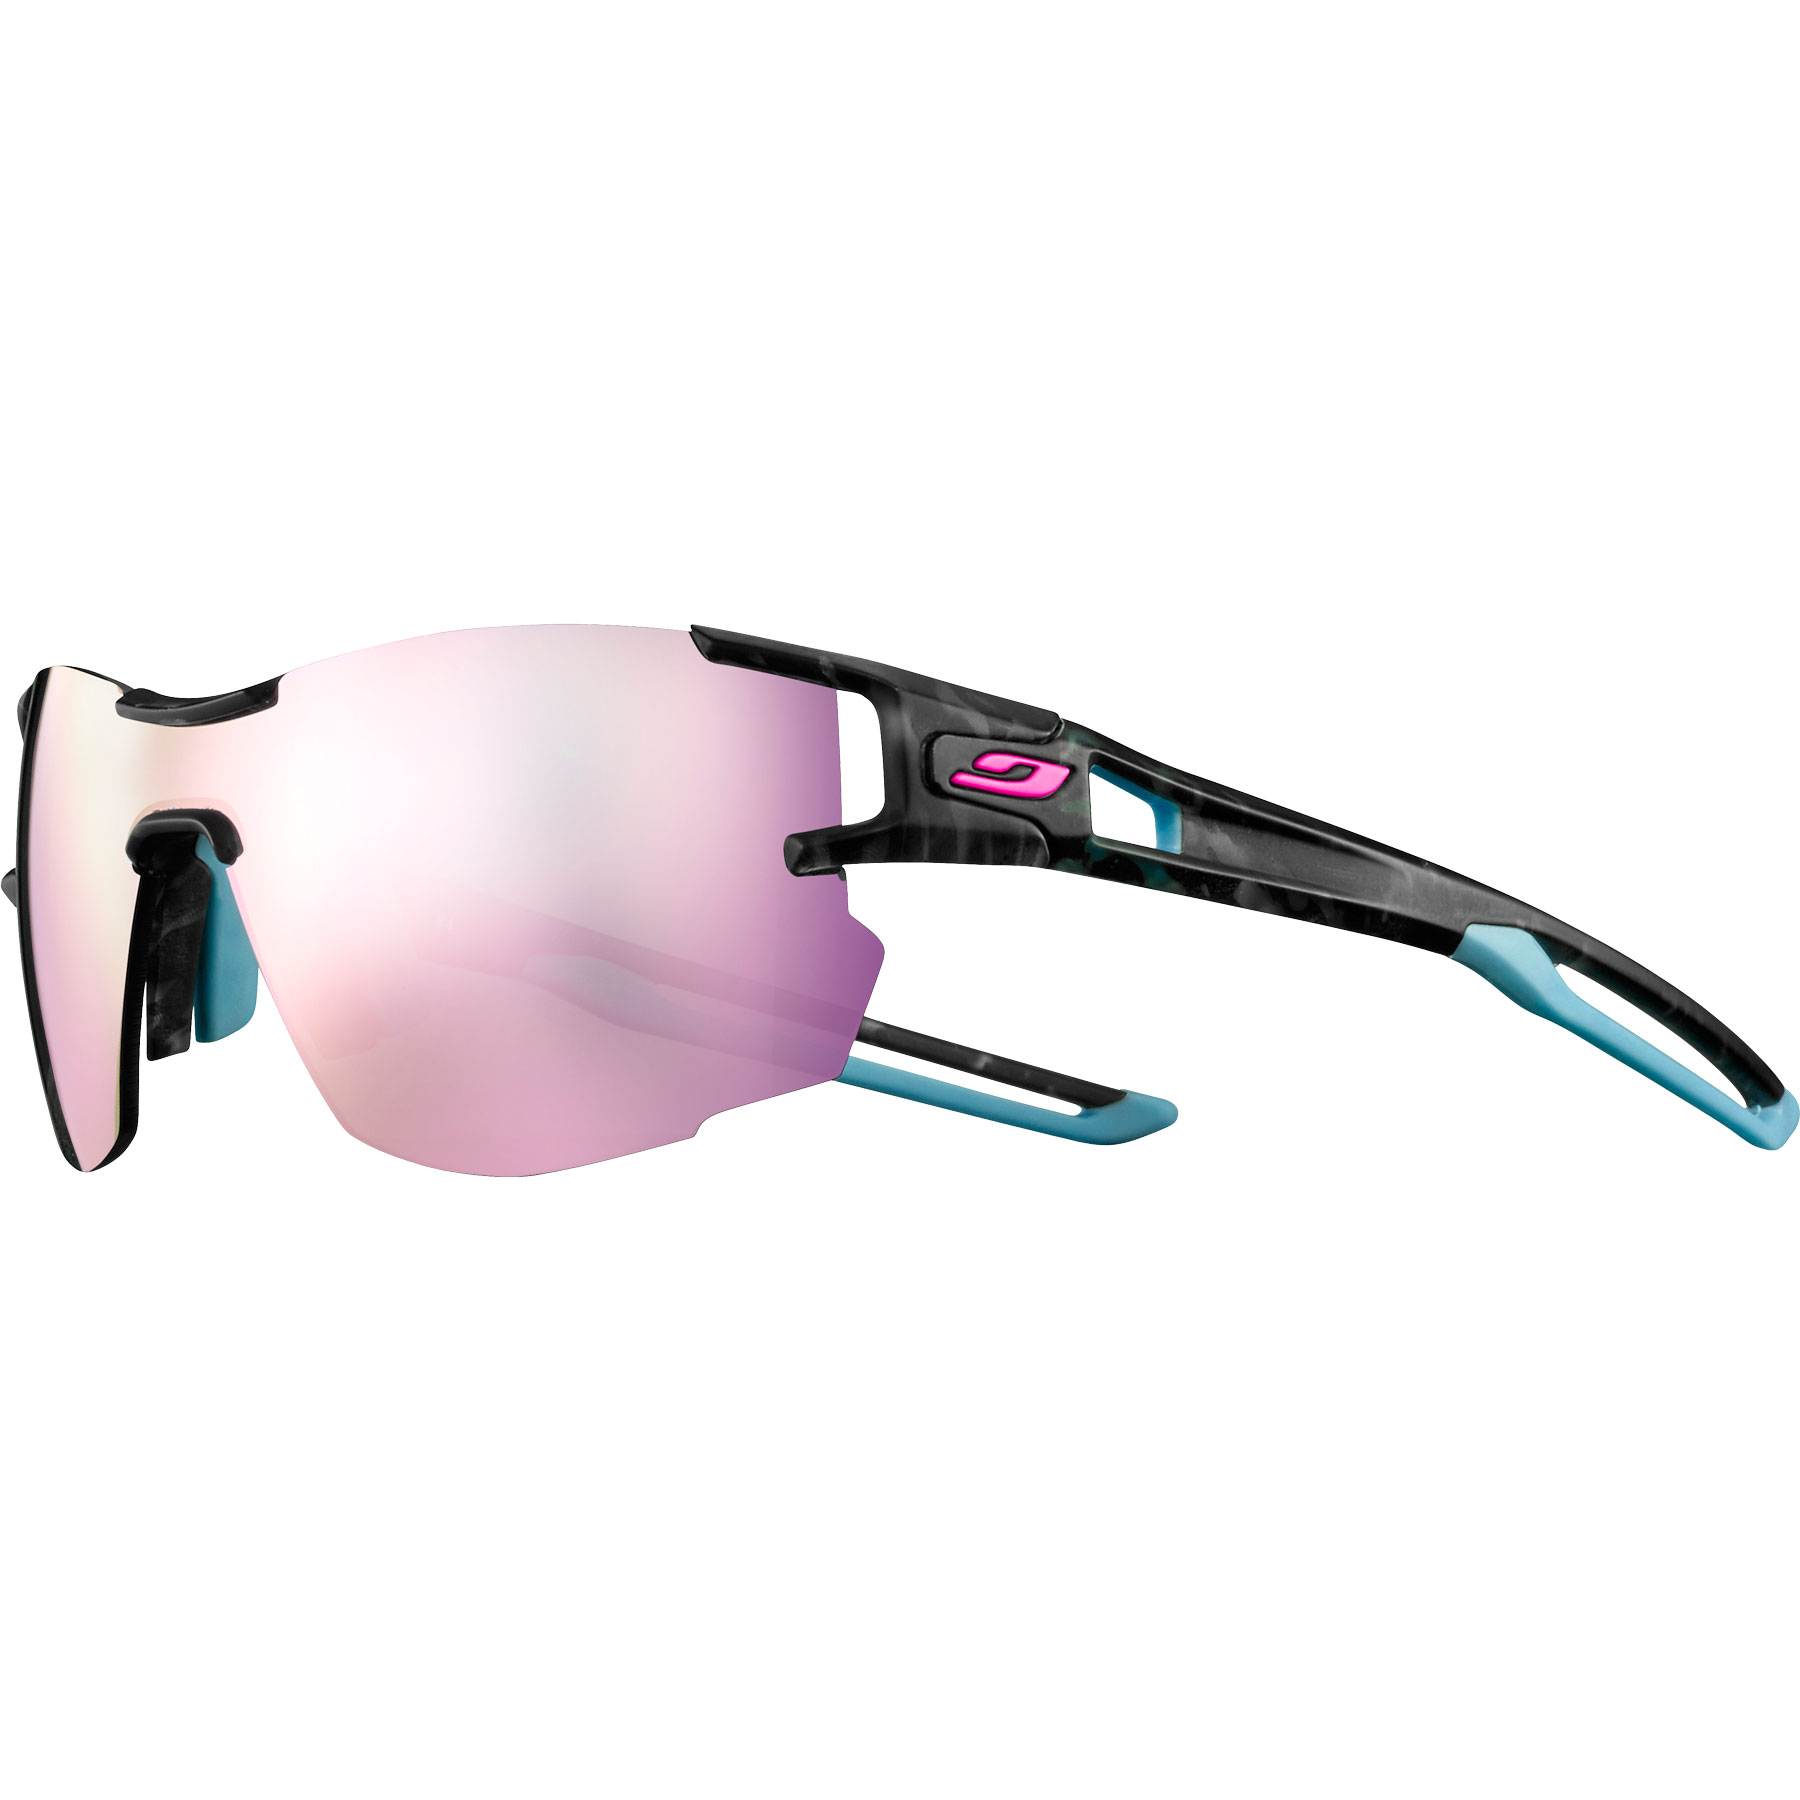 Productfoto van Julbo Aerolite Spectron 3CF Women Sunglasses - Grey Blue / Multilayer Light Pink